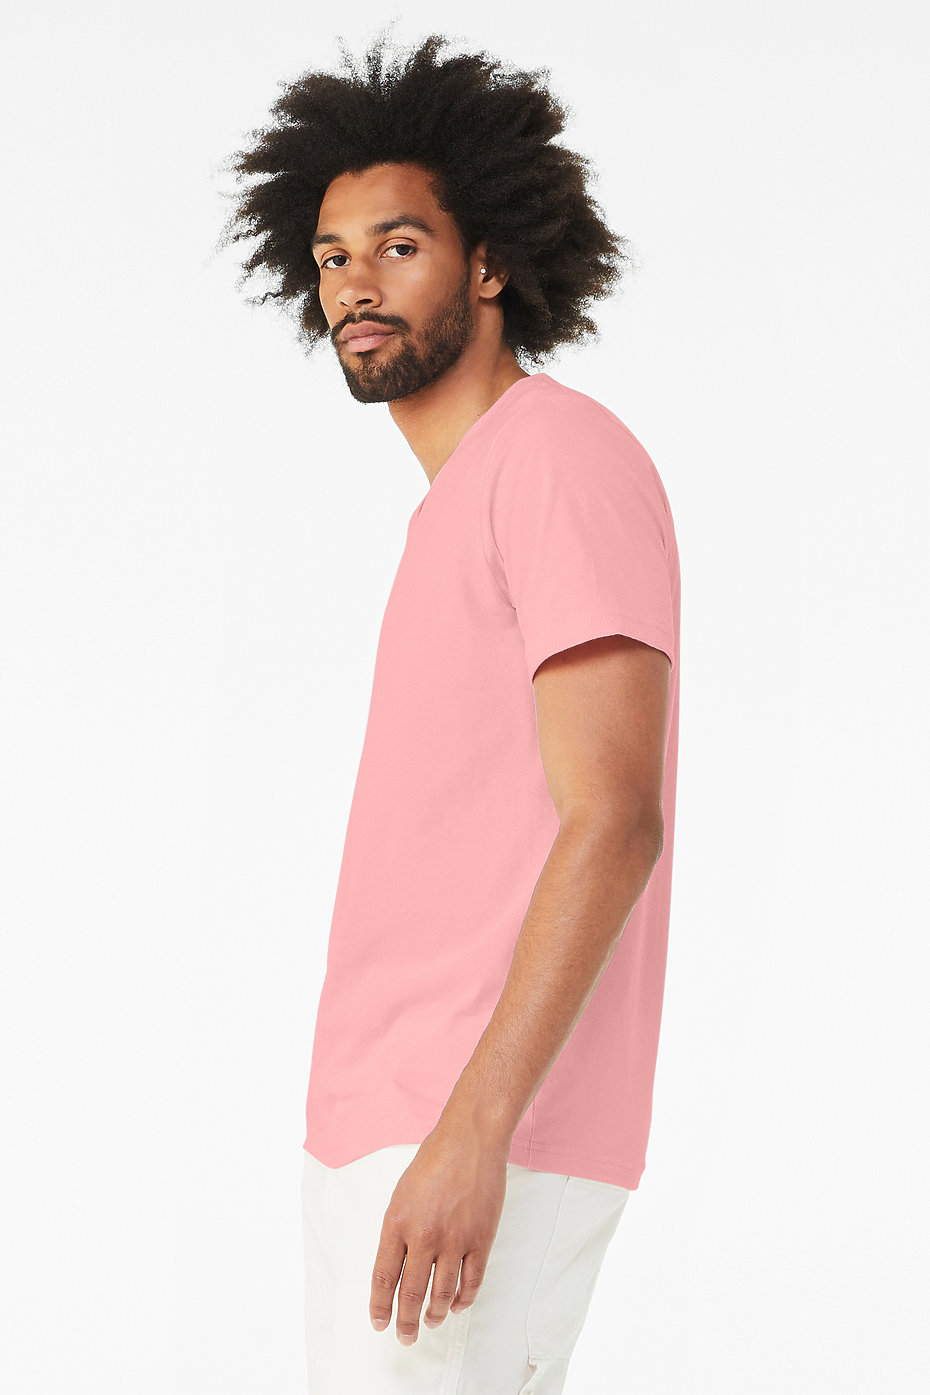 Hot Pink Men's Crew Neck T Shirt  Premium Menswear at Best Value Prices